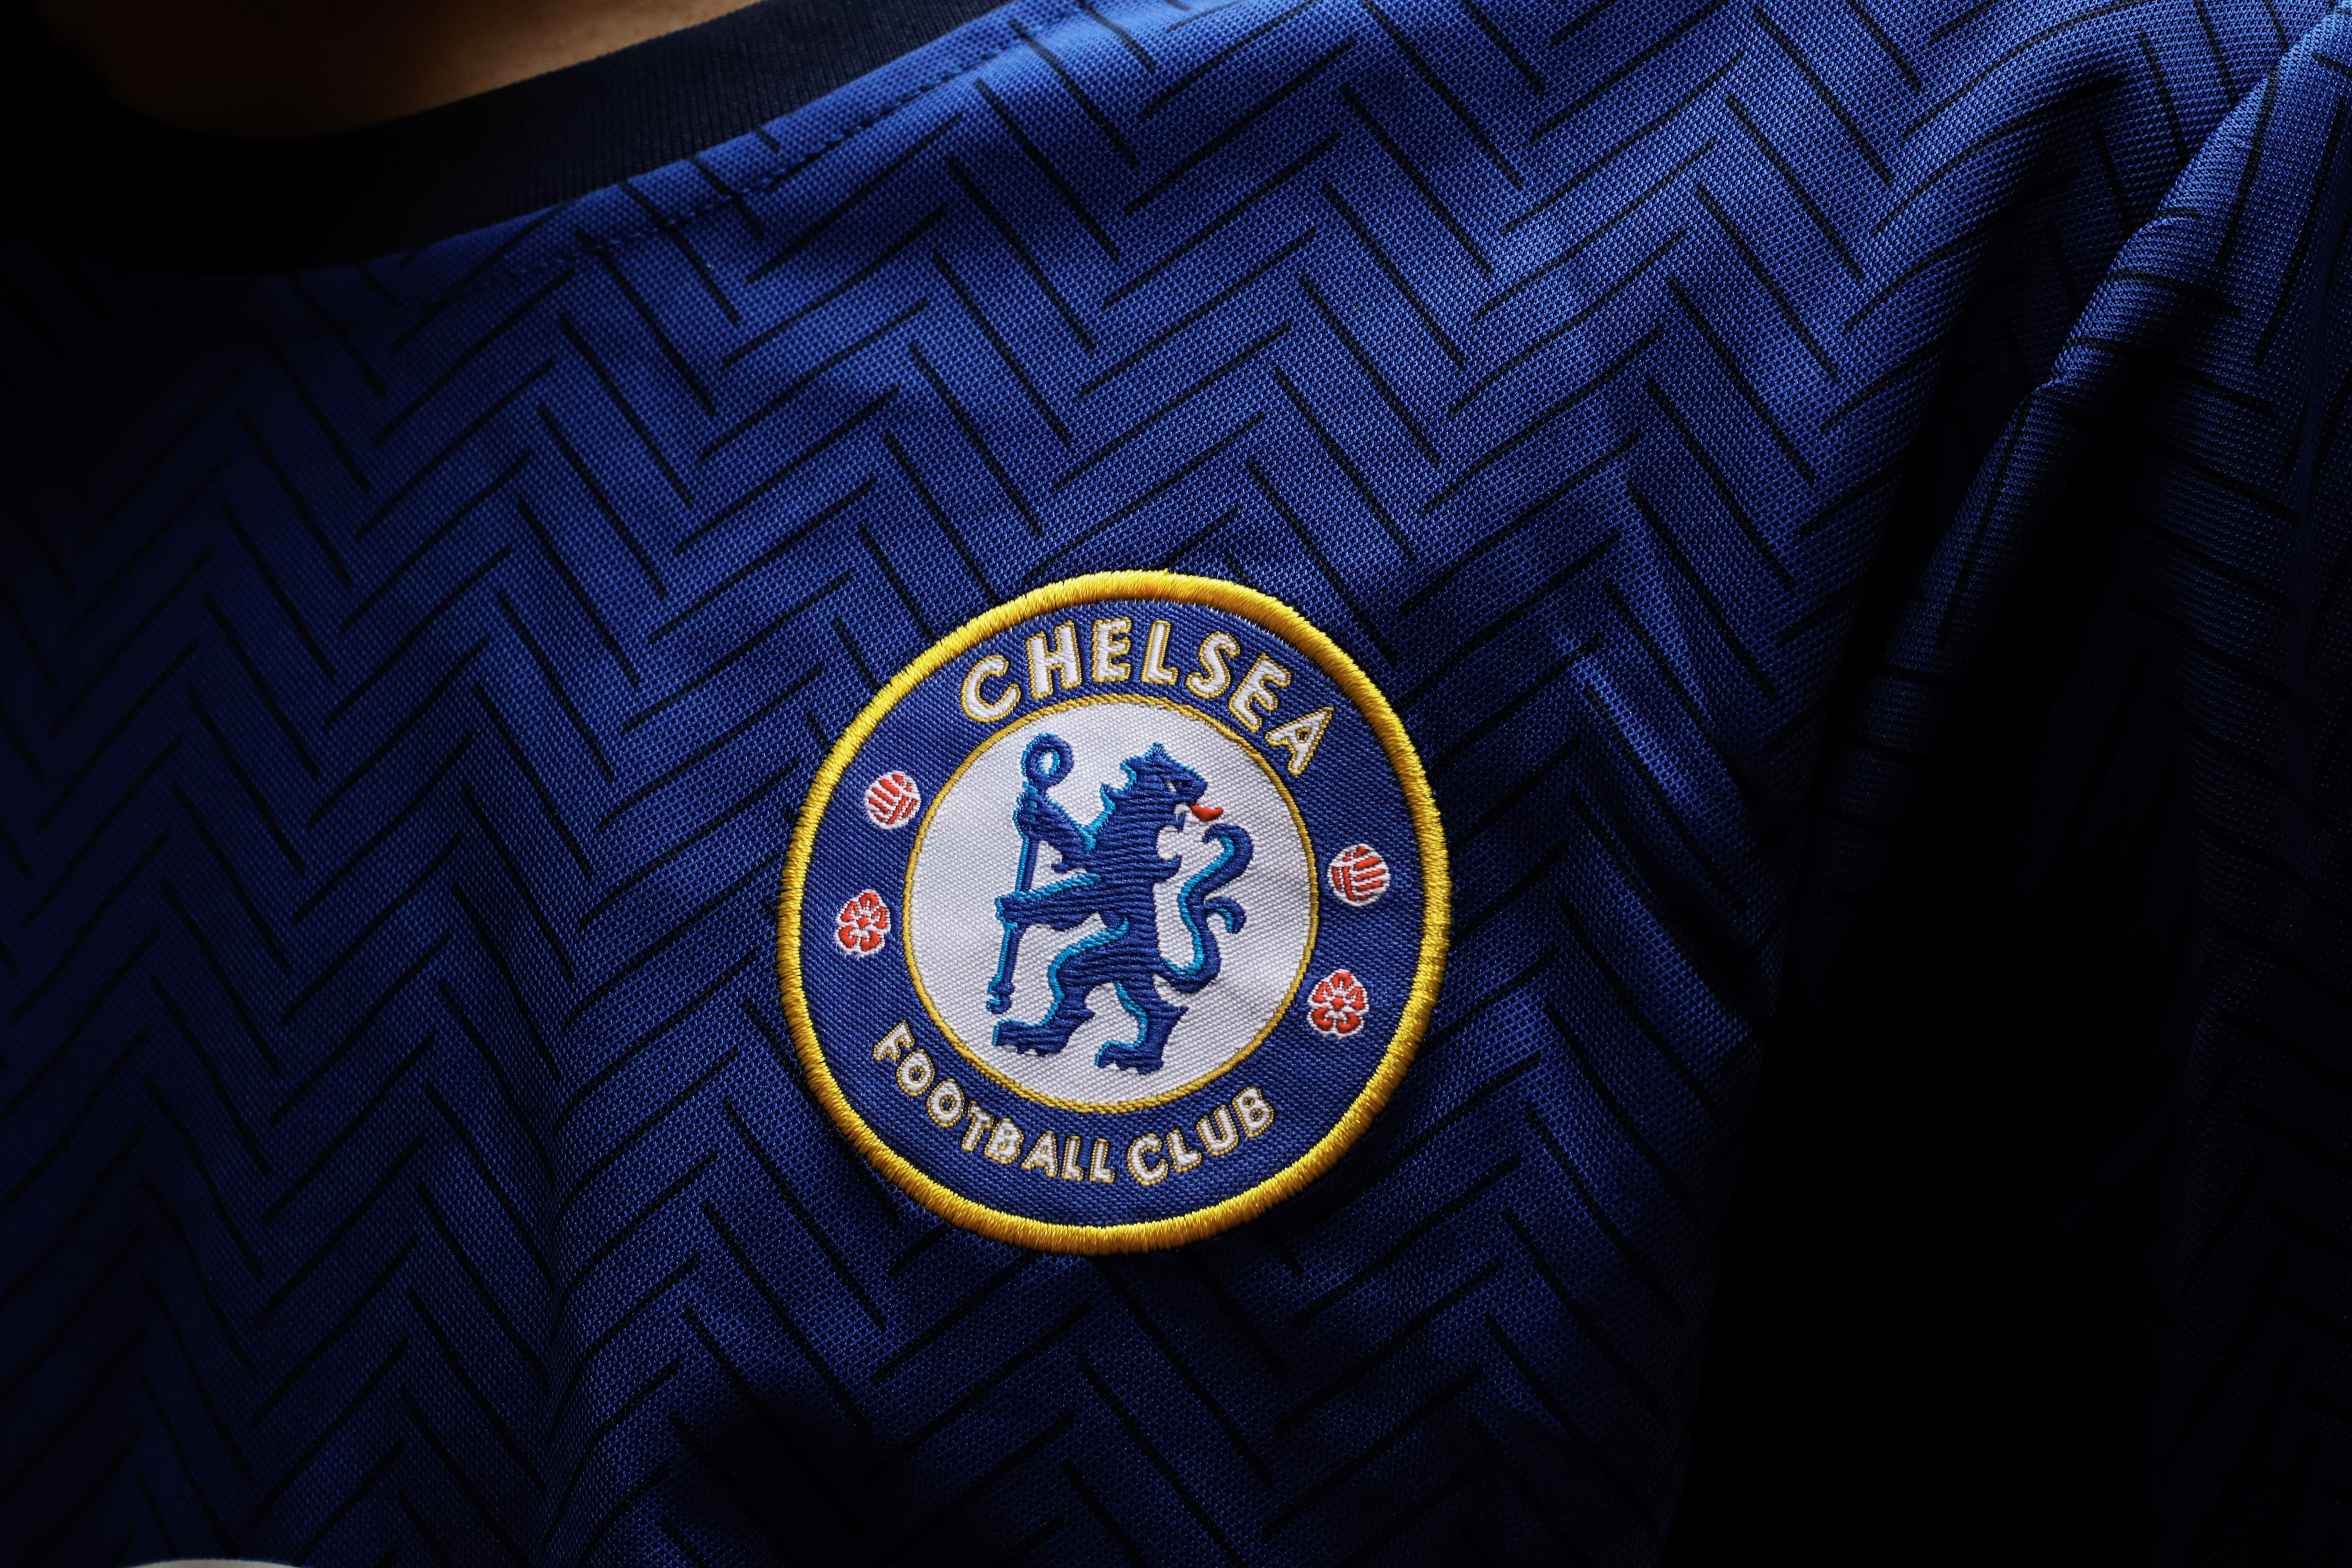 Chelsea FC football shirt and badge close-up